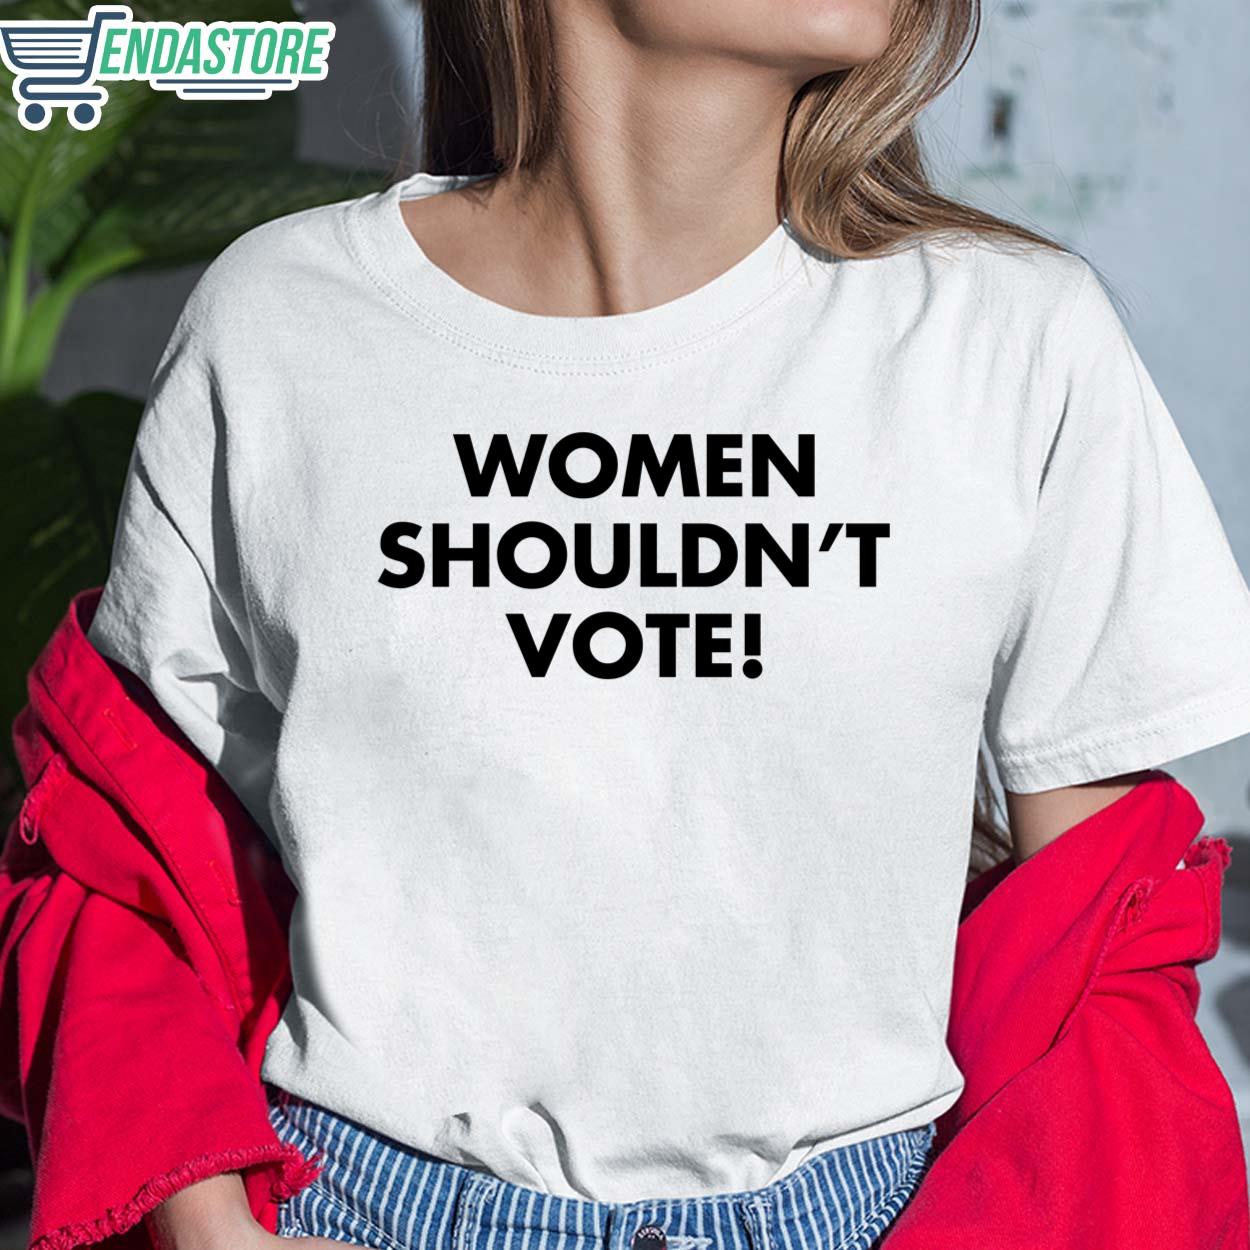 H. Pearl Davis Women Shouldn't Vote Shirt - Endastore.com